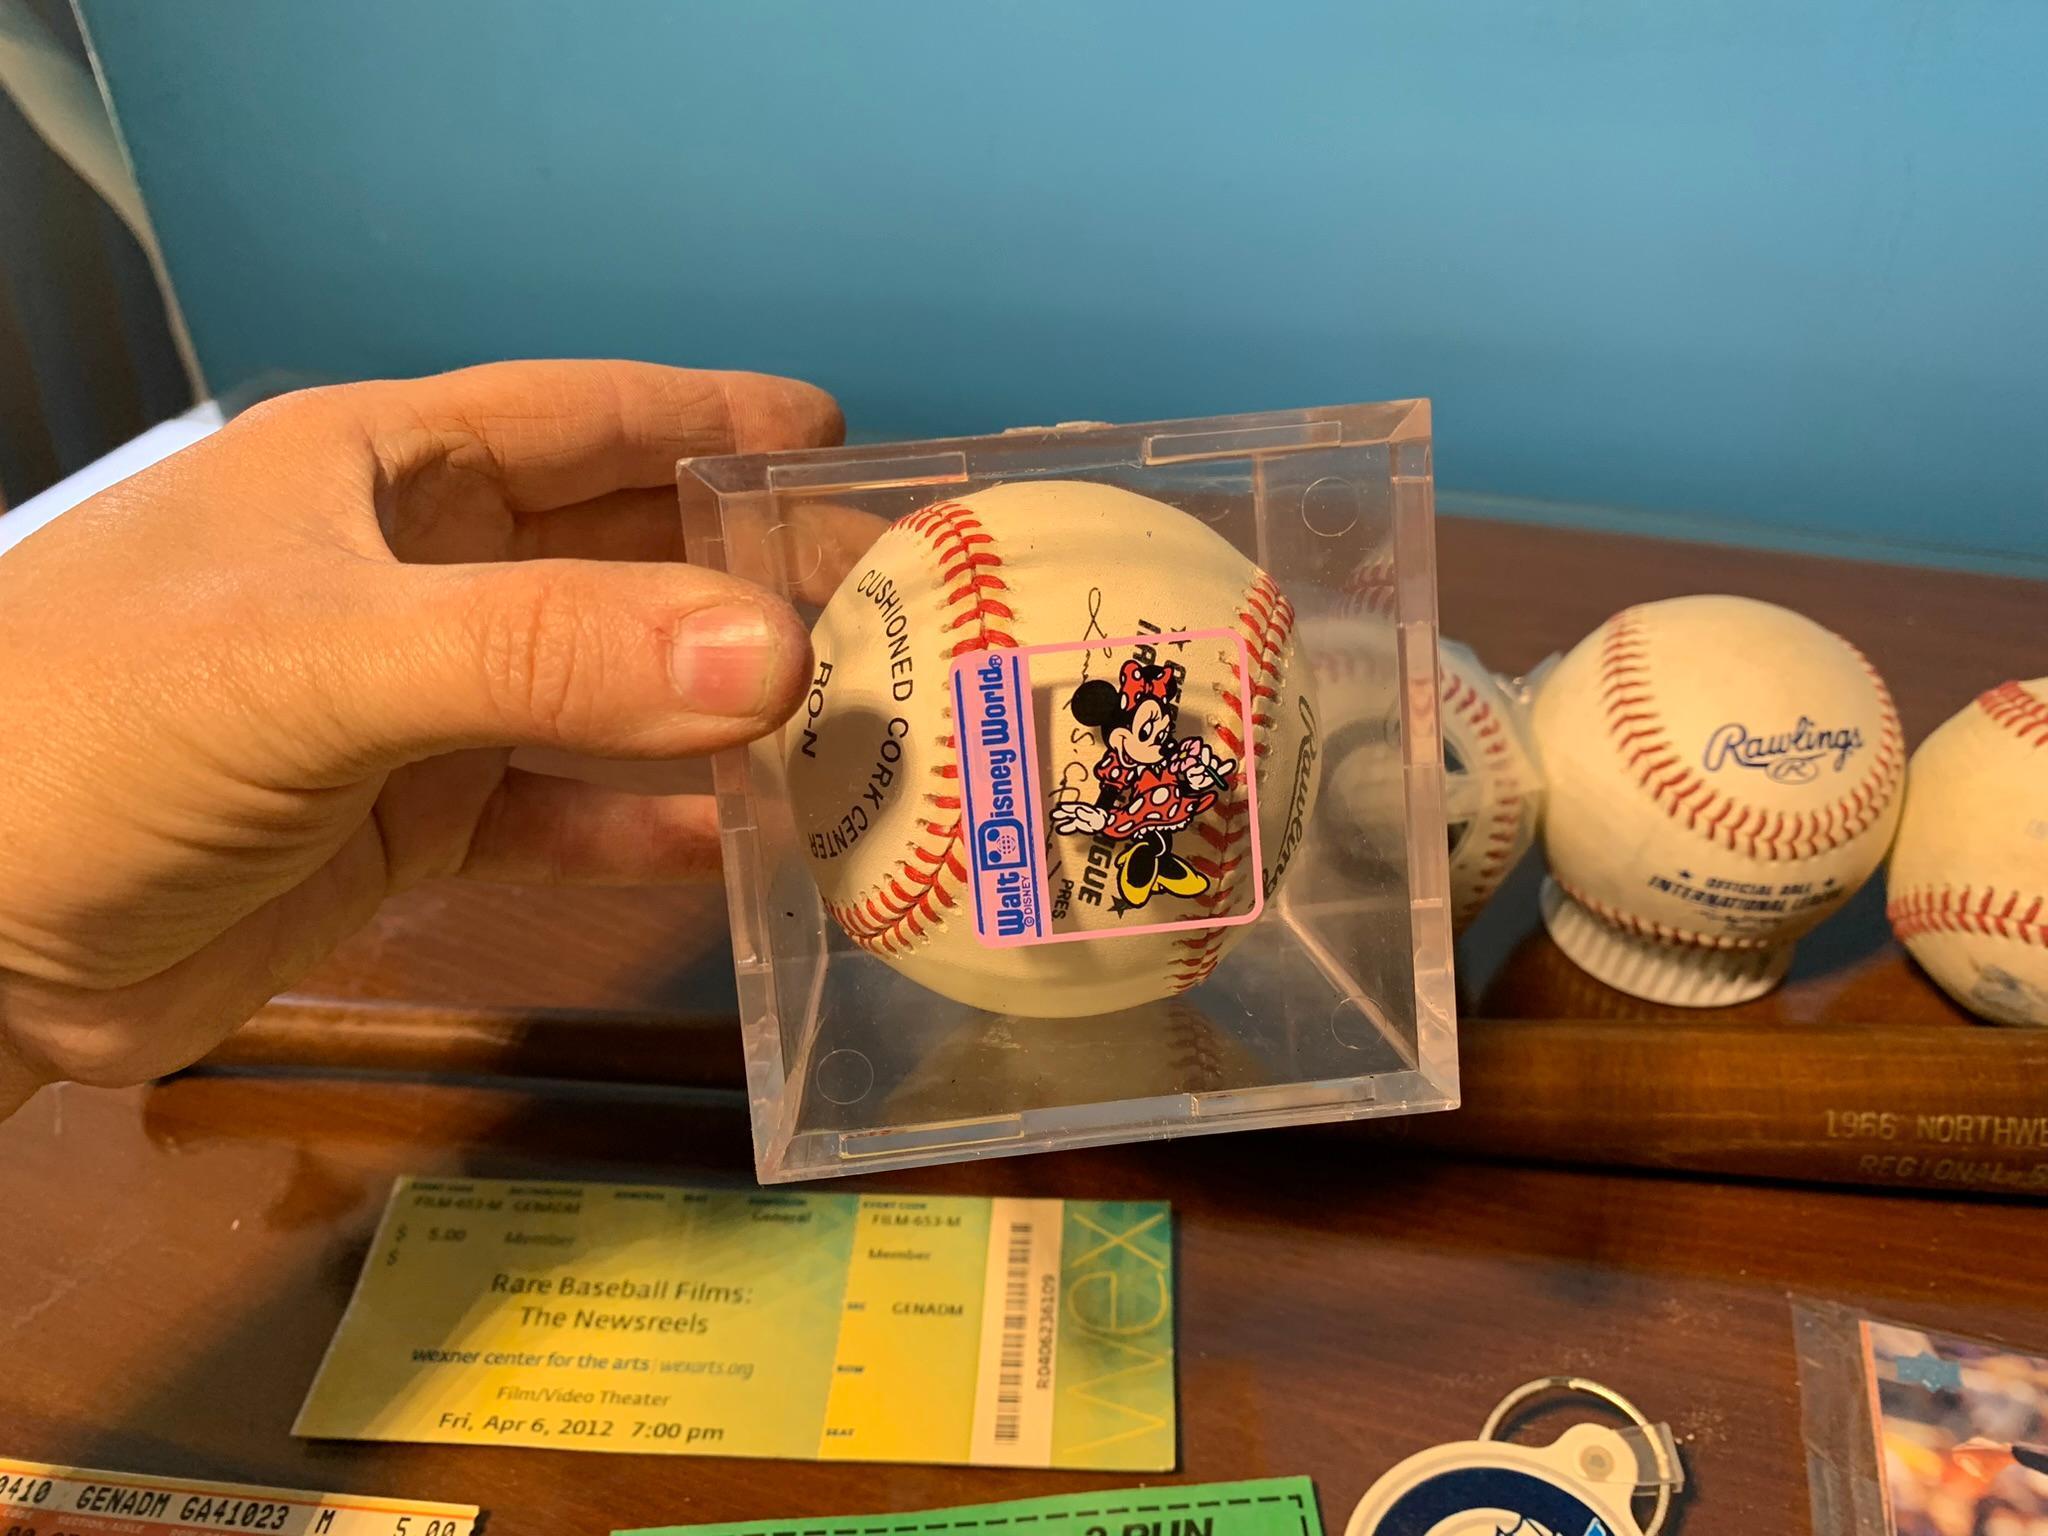 Group of Collectable Baseball Memorabilia - Cards, Tickets & More